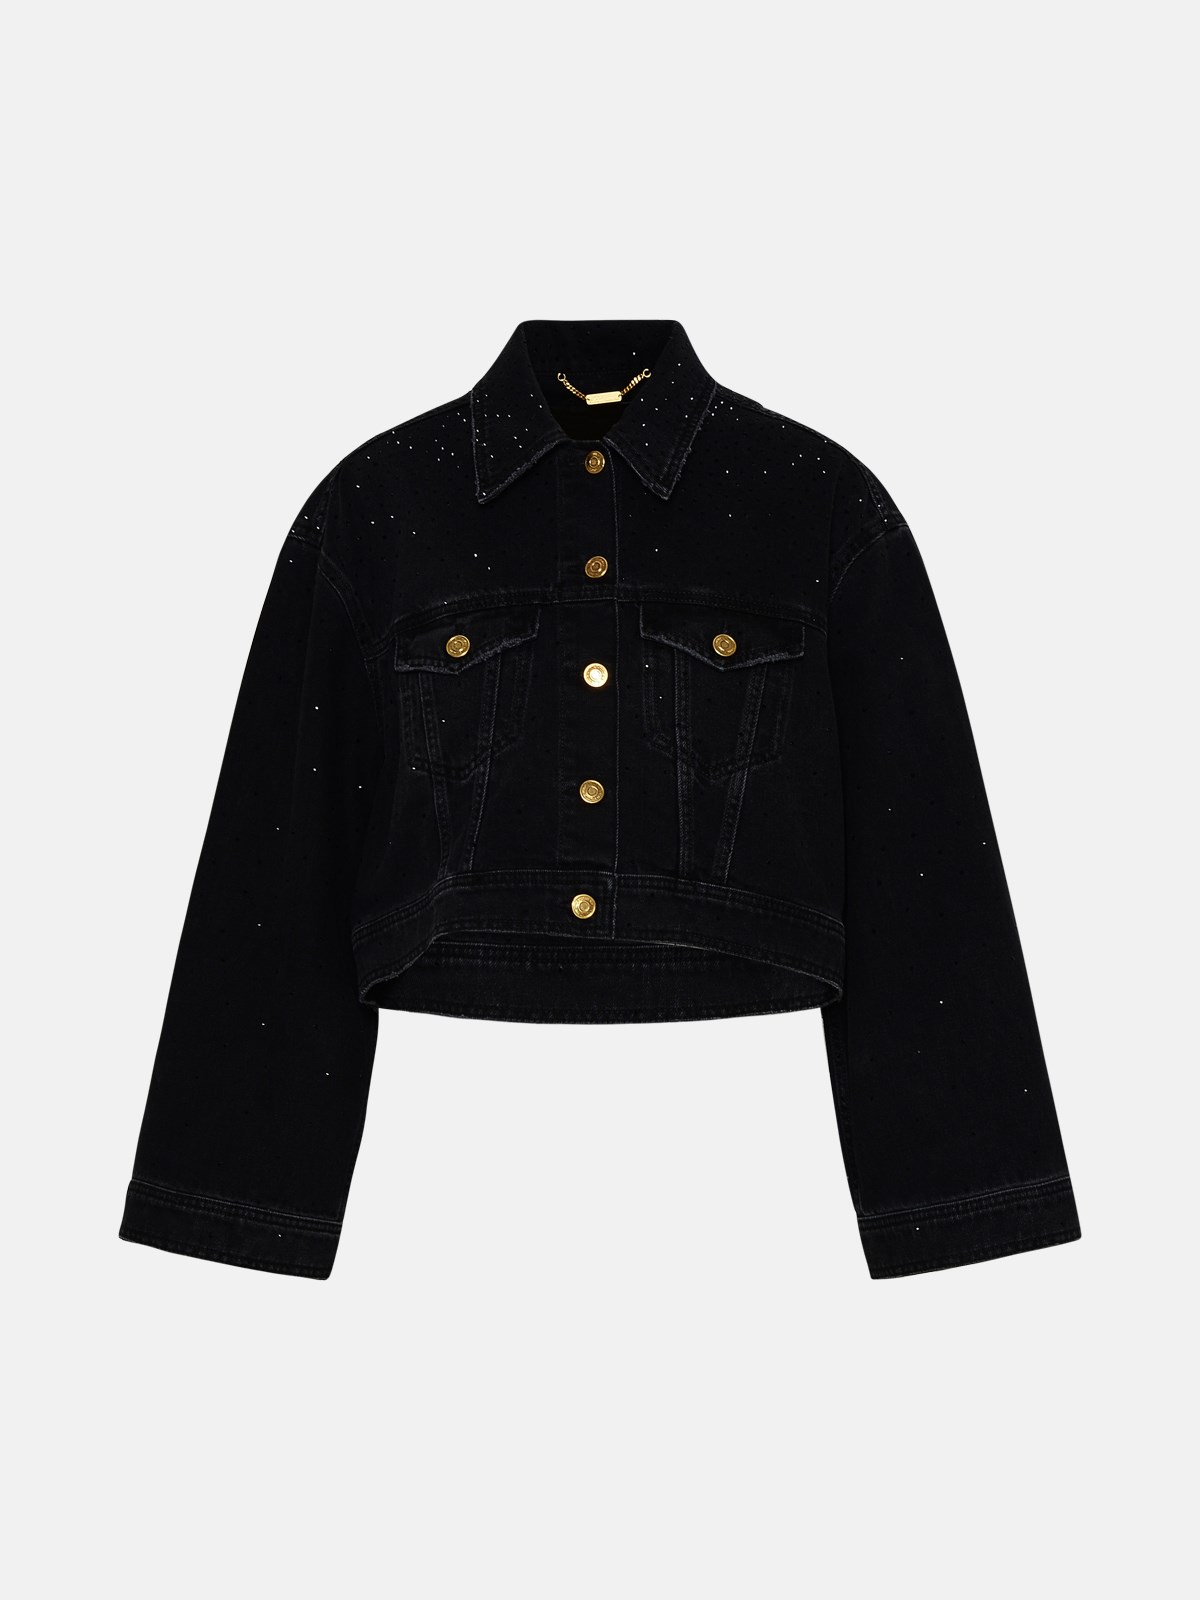 Blumarine Black Denim Jacket